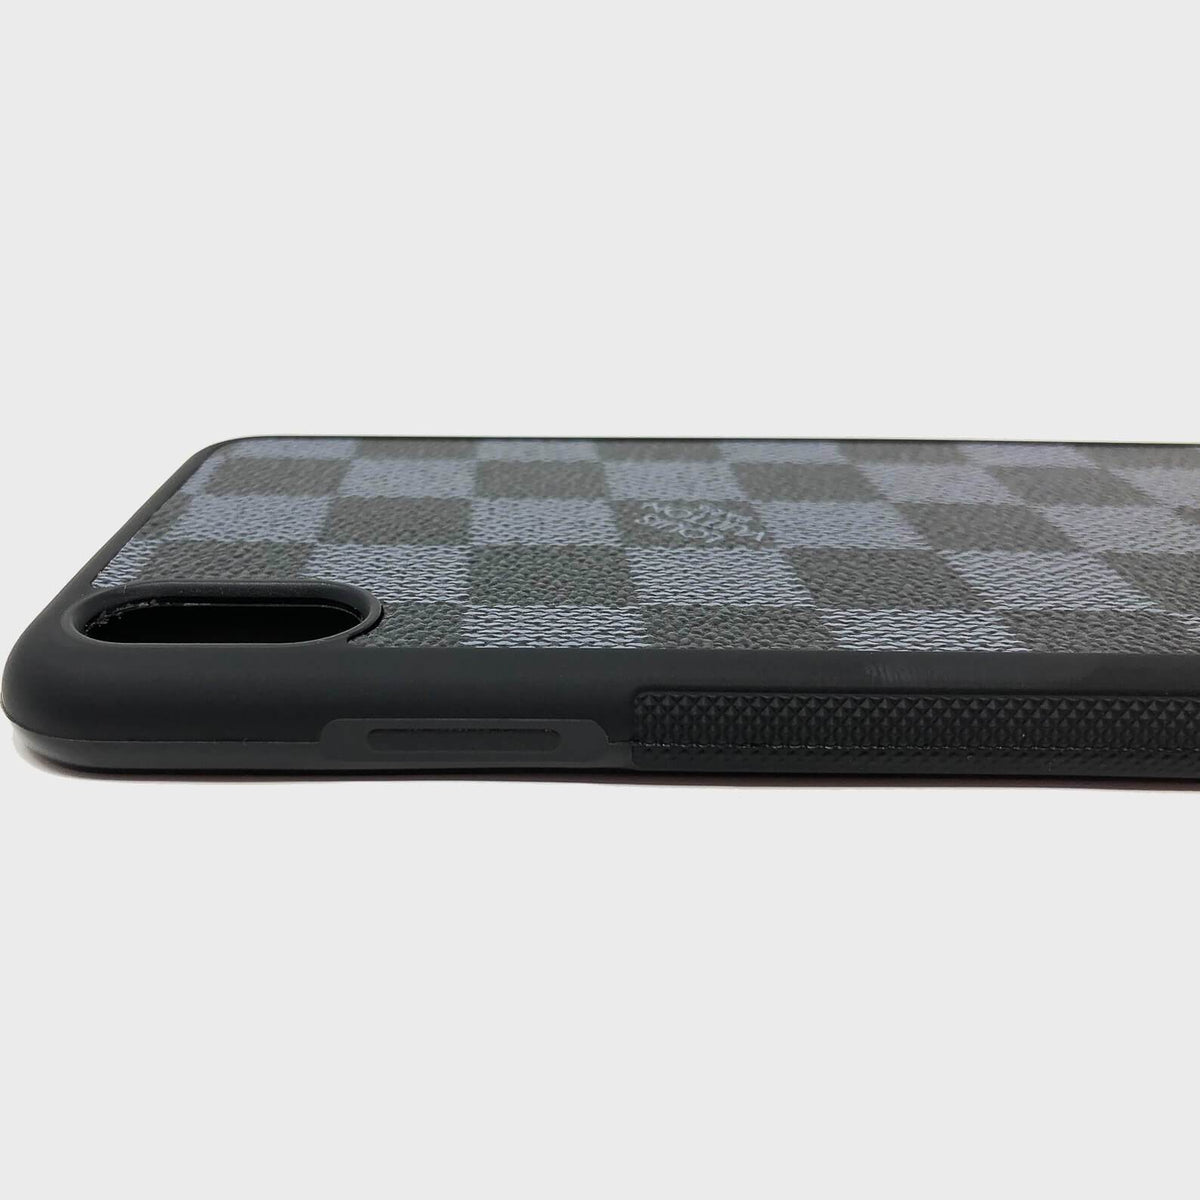 Louis Vuitton Damier Graphite Canvas iPad Essential Case – Luxuria & Co.